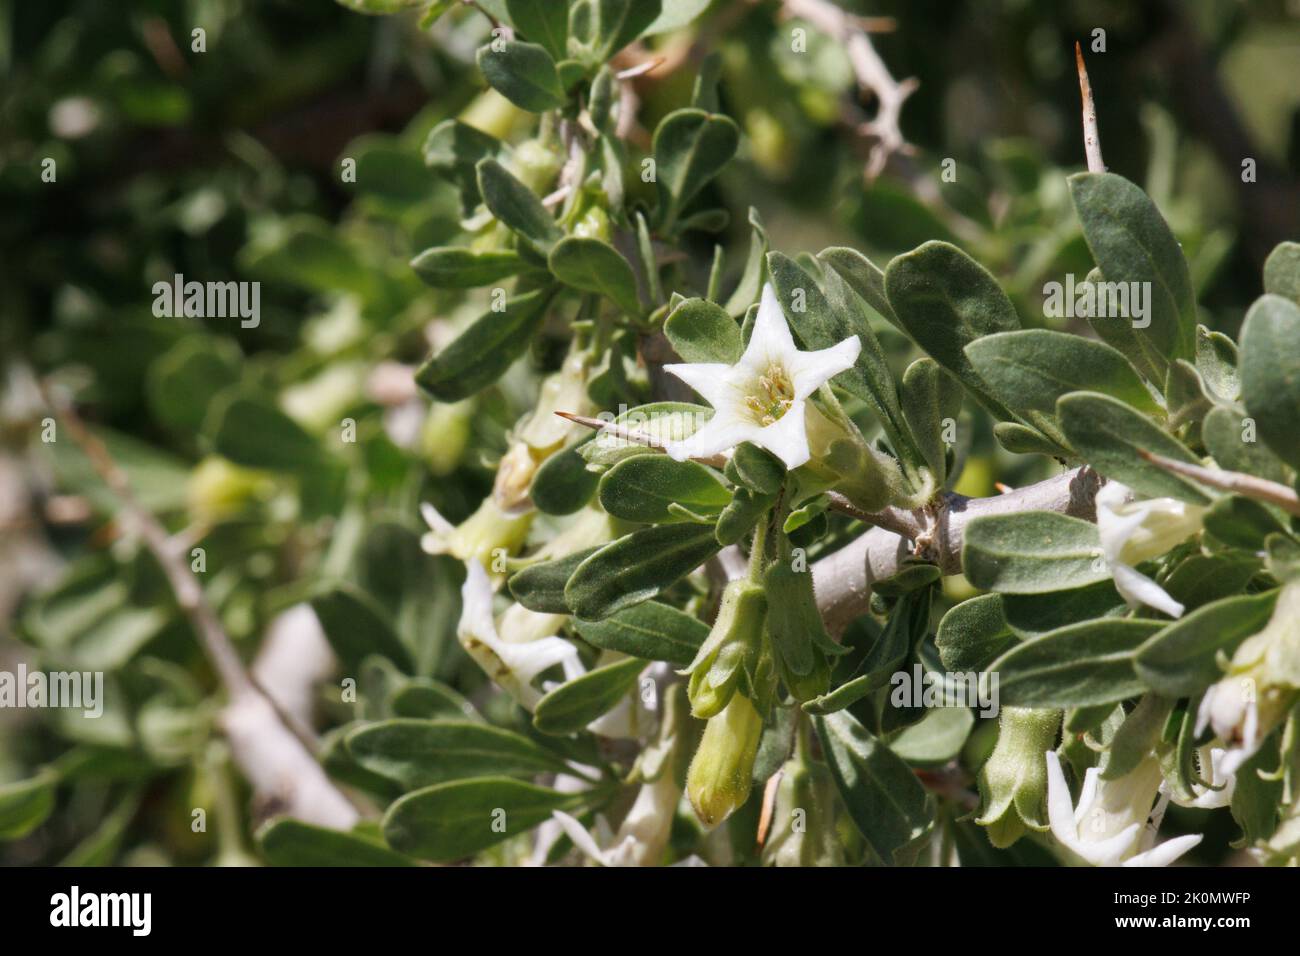 White flowering cymose cluster inflorescences of Lycium Cooperi, Solanaceae, native shrub in the Little San Bernardino Mountains, Springtime. Stock Photo